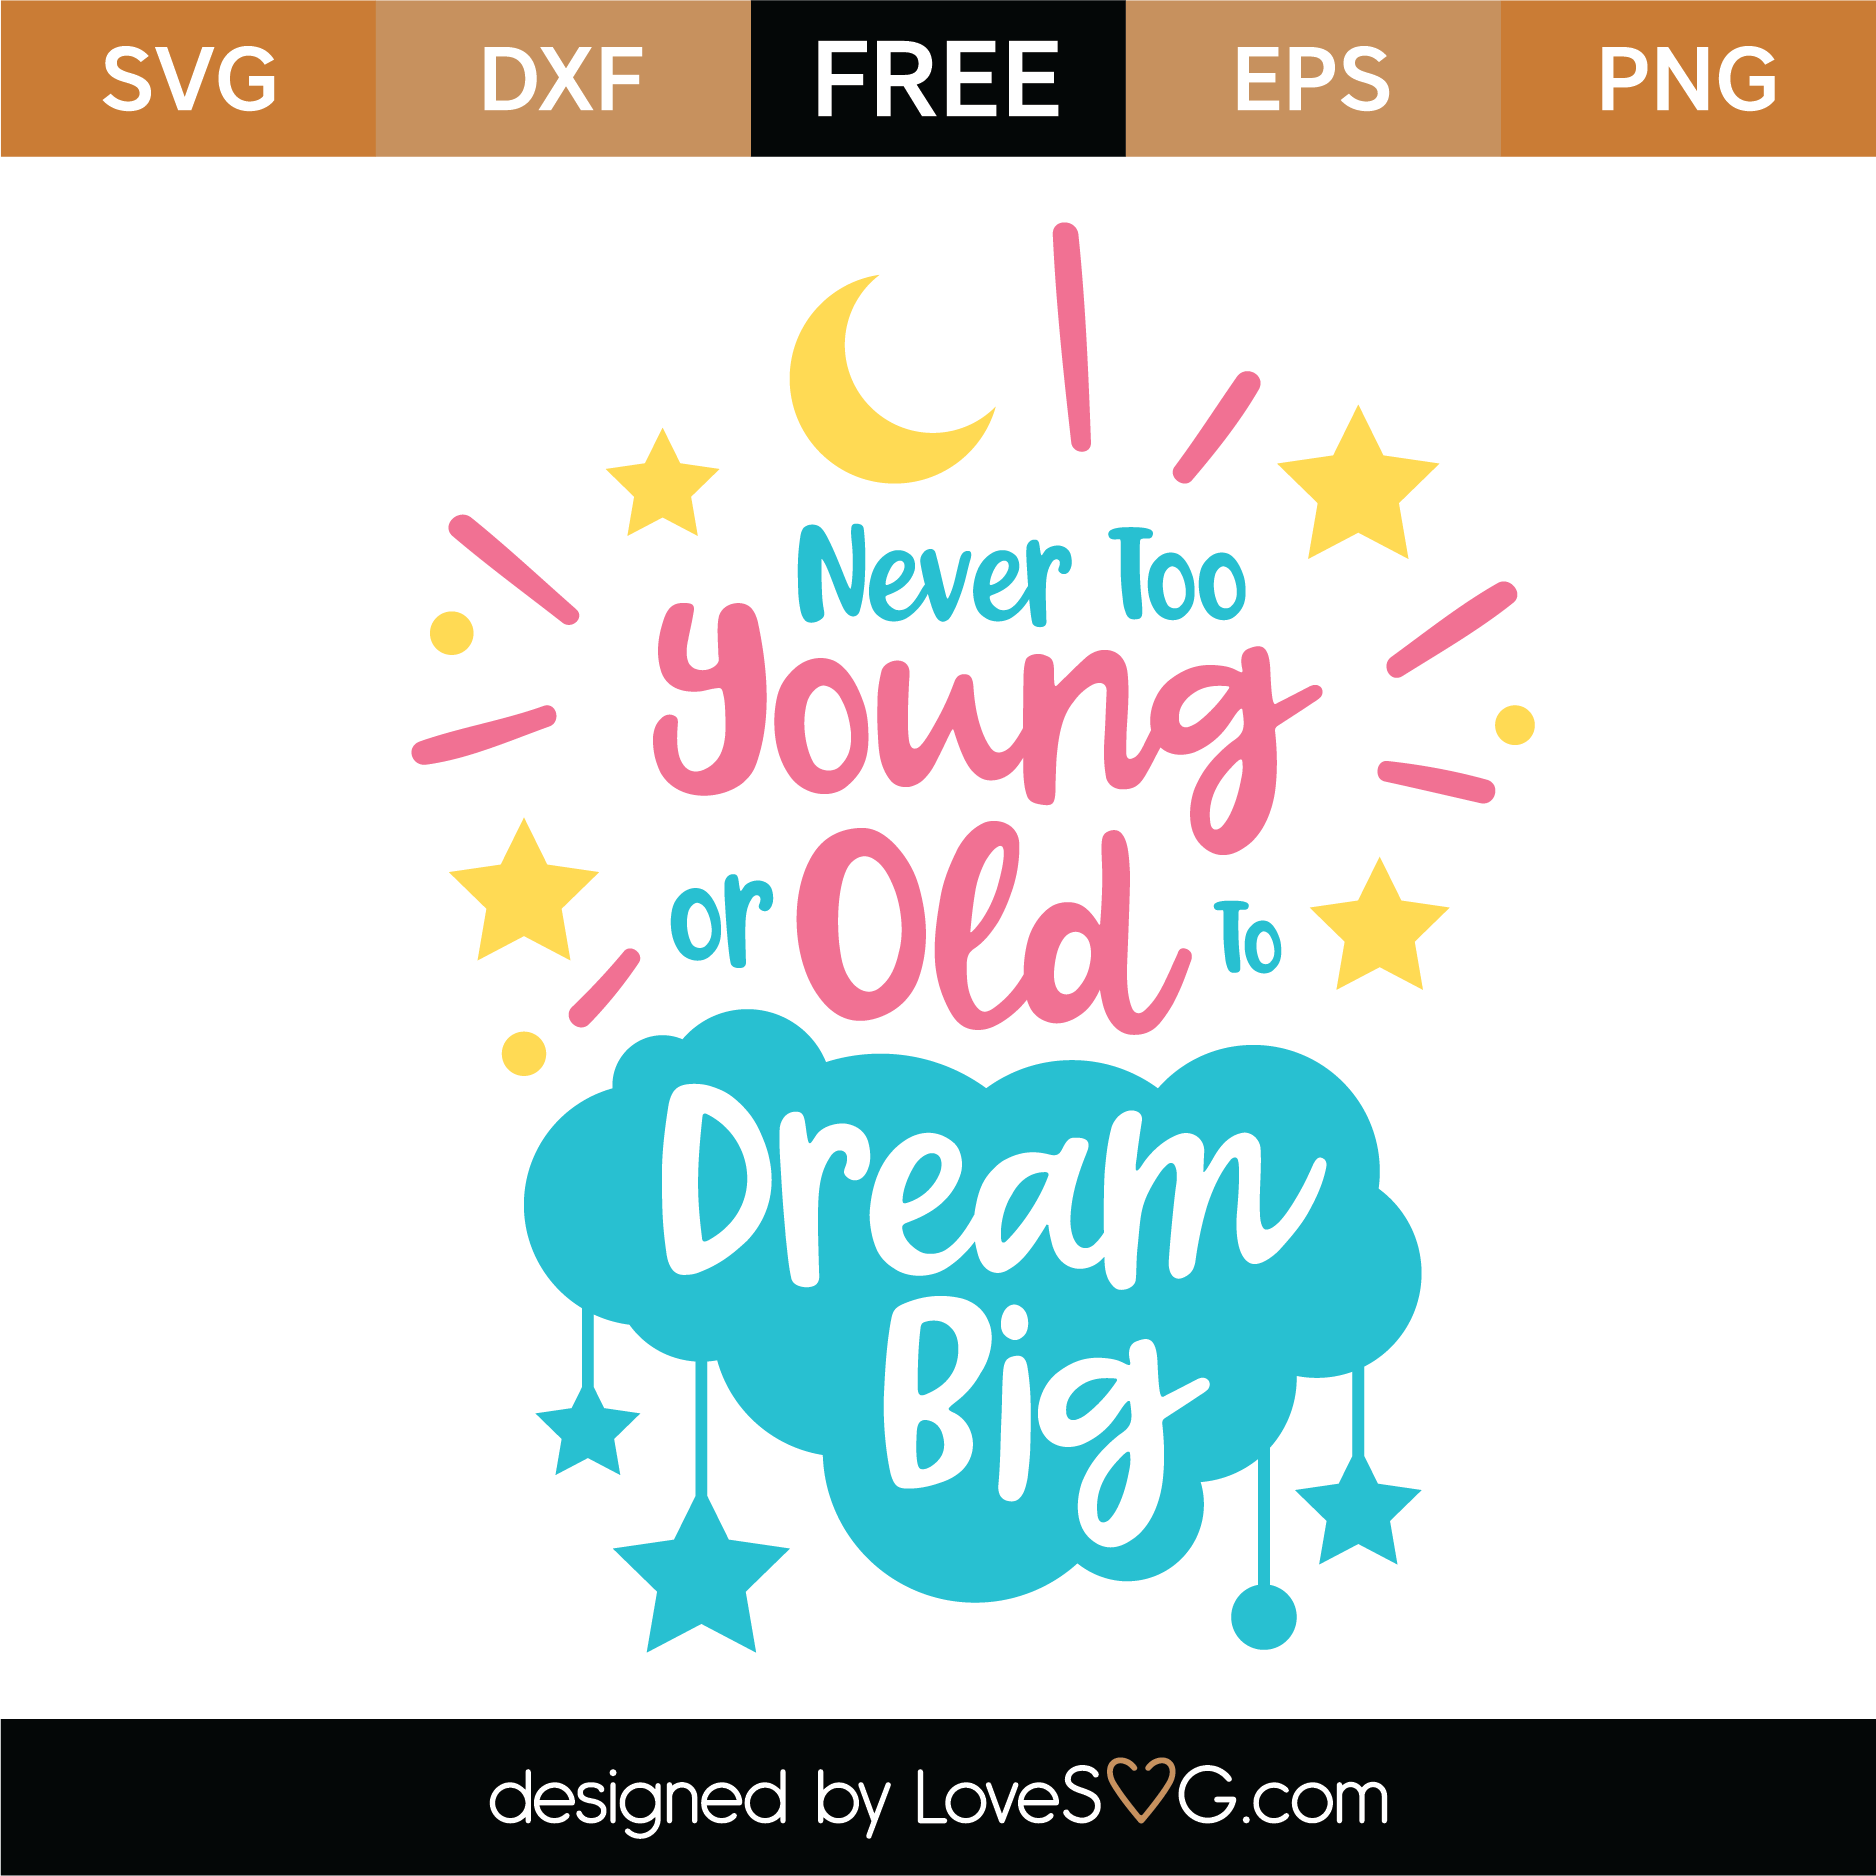 Free Dream Big SVG Cut File | Lovesvg.com